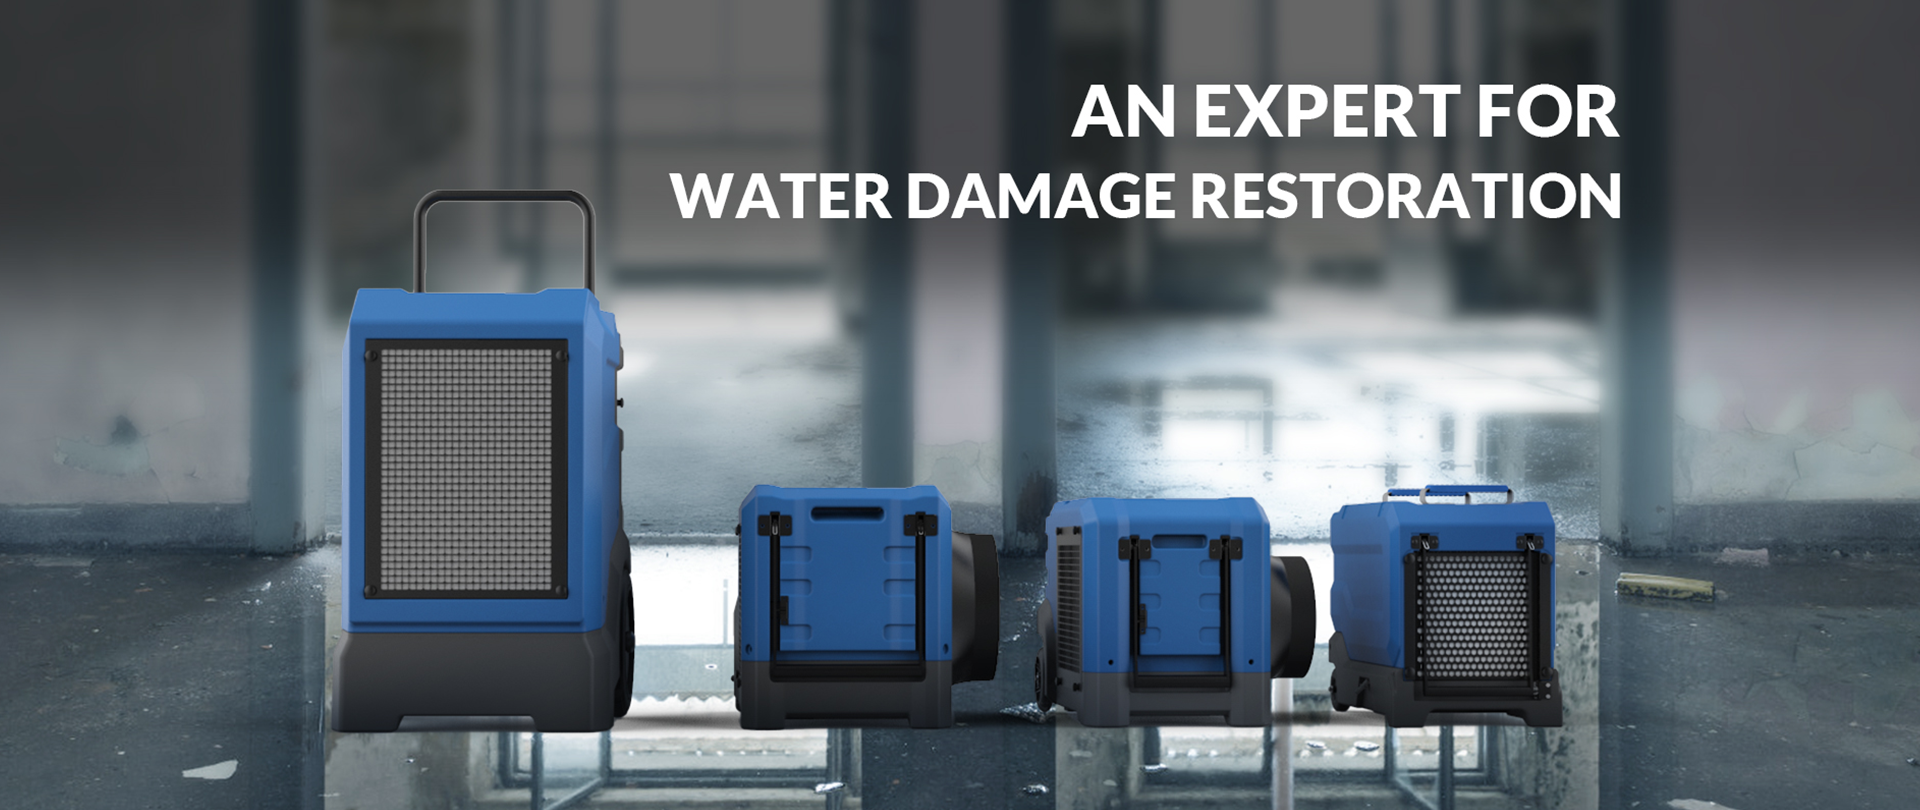 Preair Lgr Dehumidifiers for Water Damage Restoration